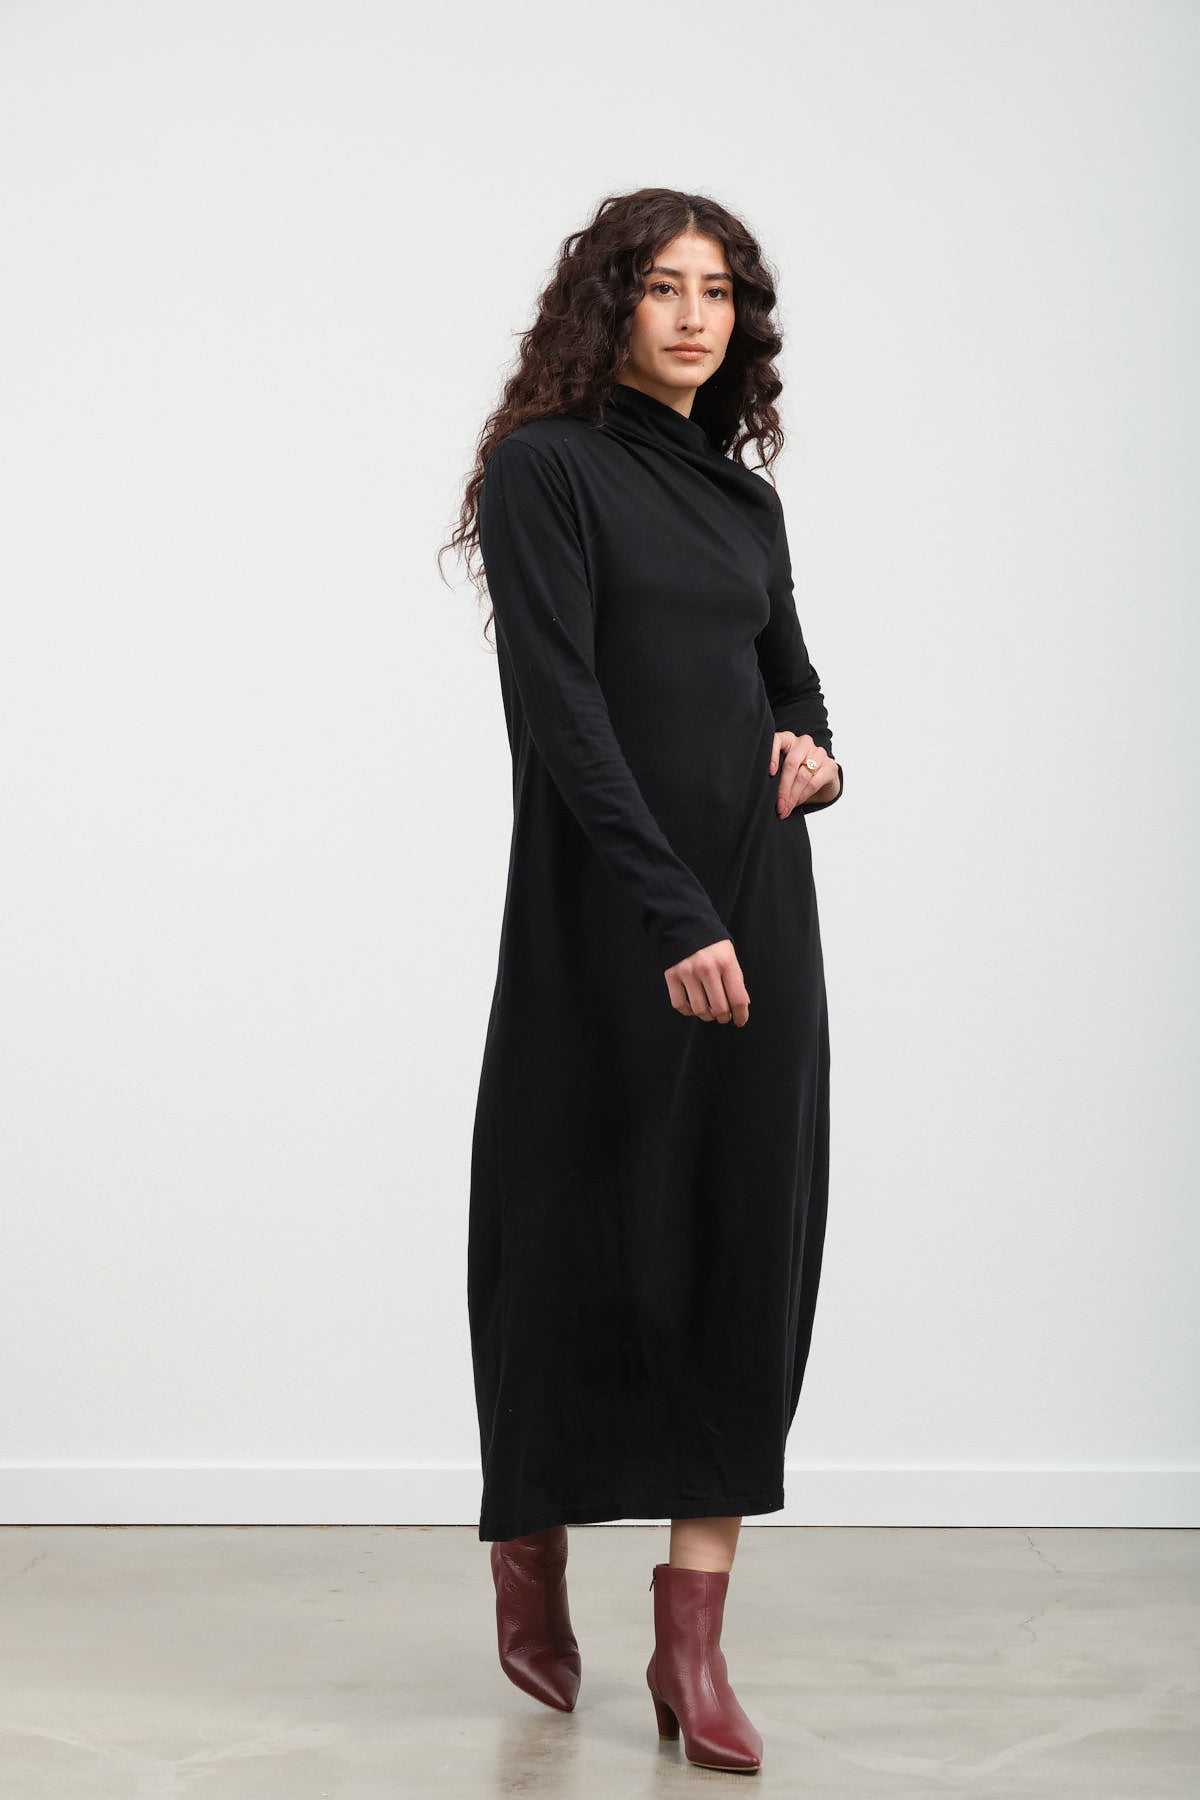 Atelier Delphine Lille Dress in Black